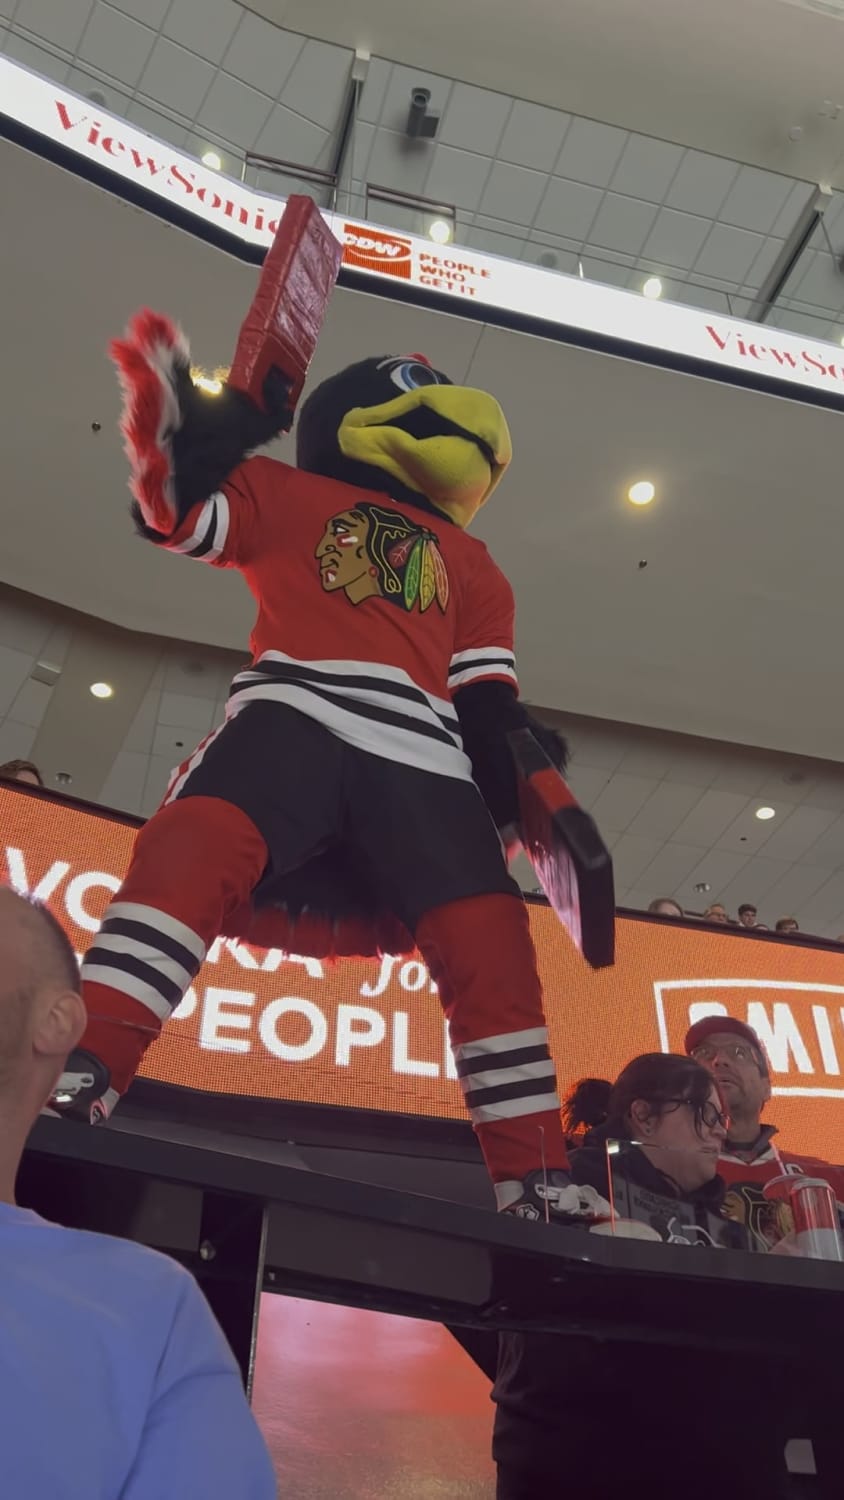 Pro-bird propagandist brainwashes crowd at professional Hockey game